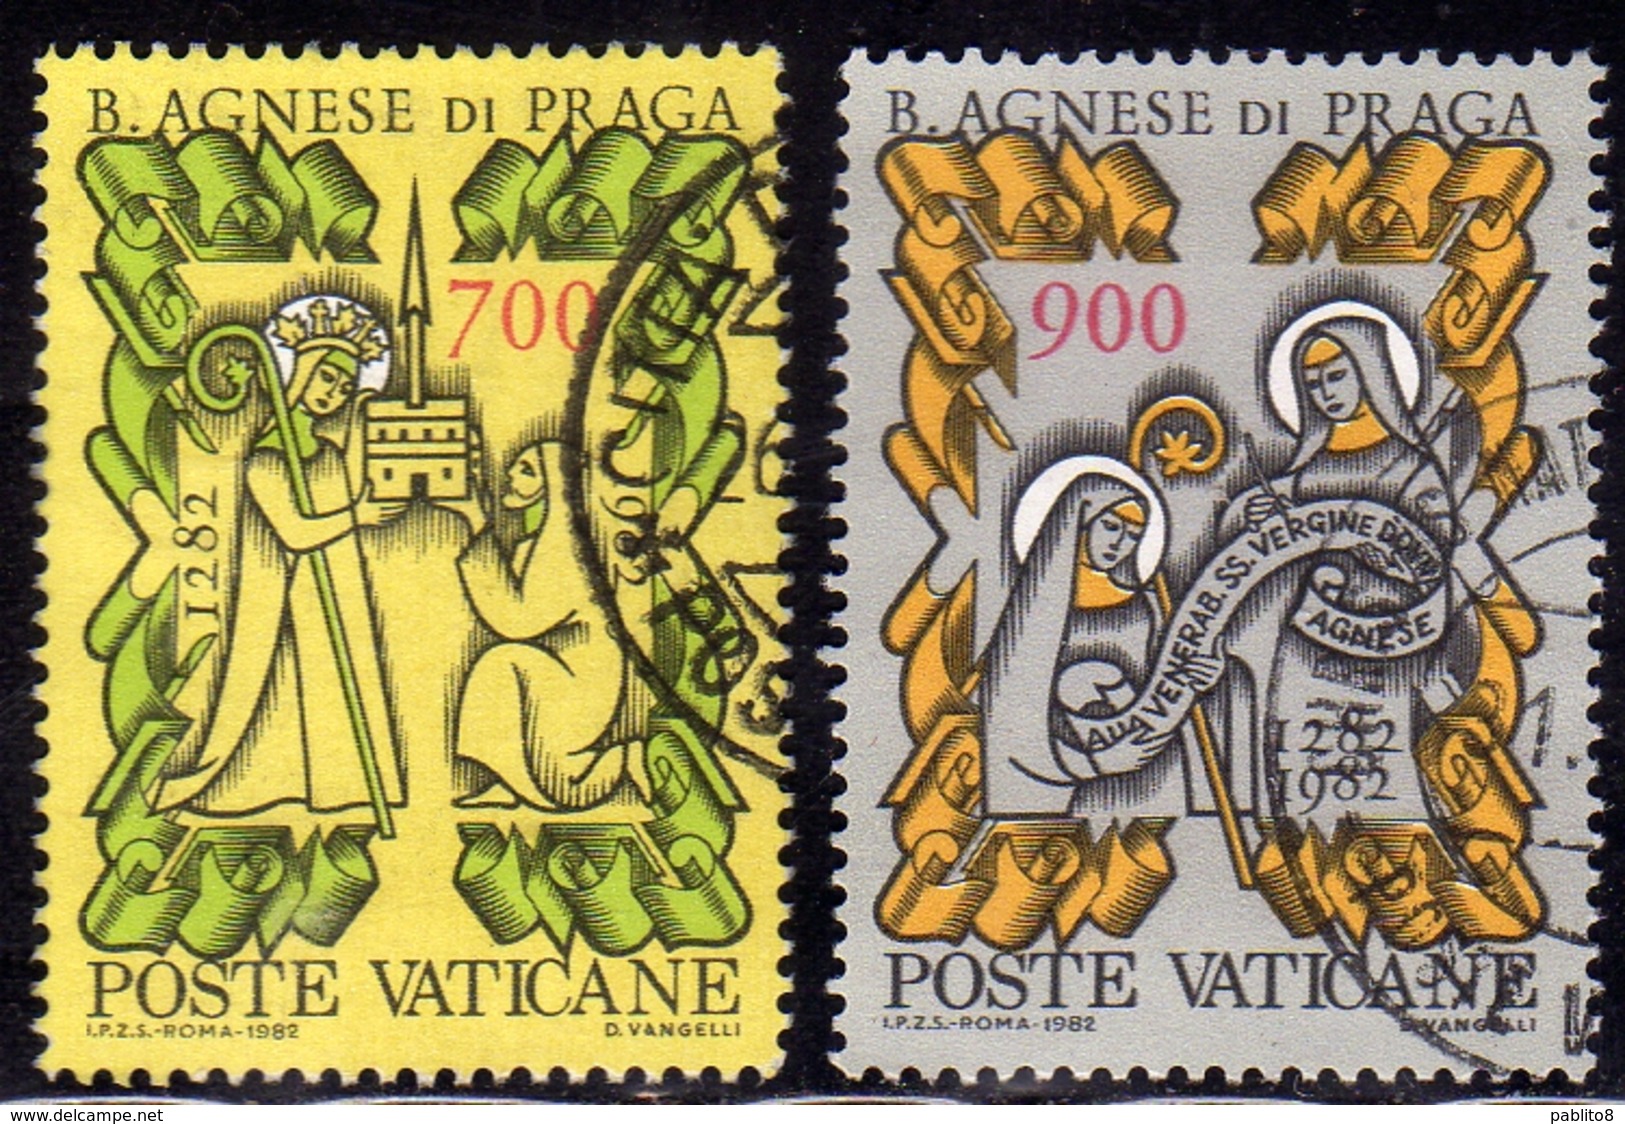 CITTÀ DEL VATICANO VATICAN VATIKAN 1982 S. SANT'AGNESE ST. AGNES SERIE COMPLETA COMPLETE SET USATA USED OBLITERE' - Used Stamps